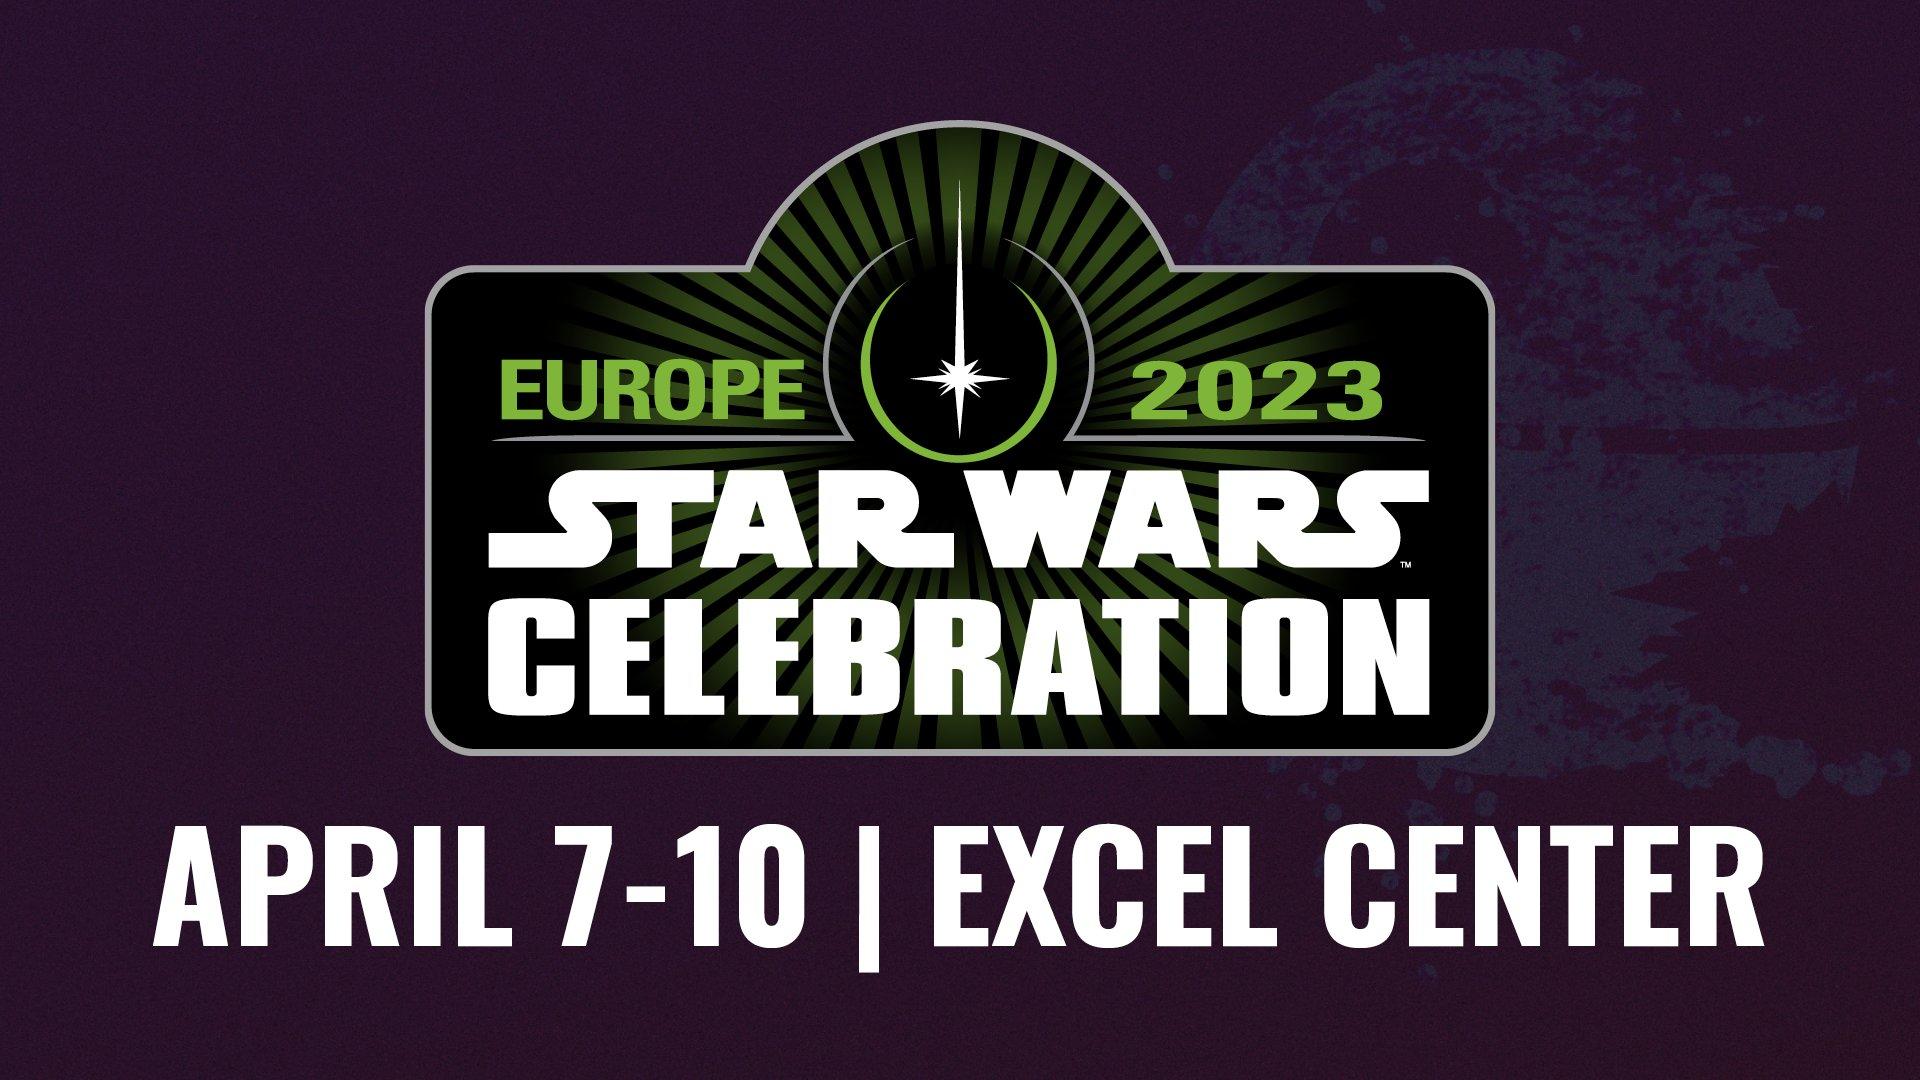 Star Wars Celebration 2023 Tickets Go on Sale This Week